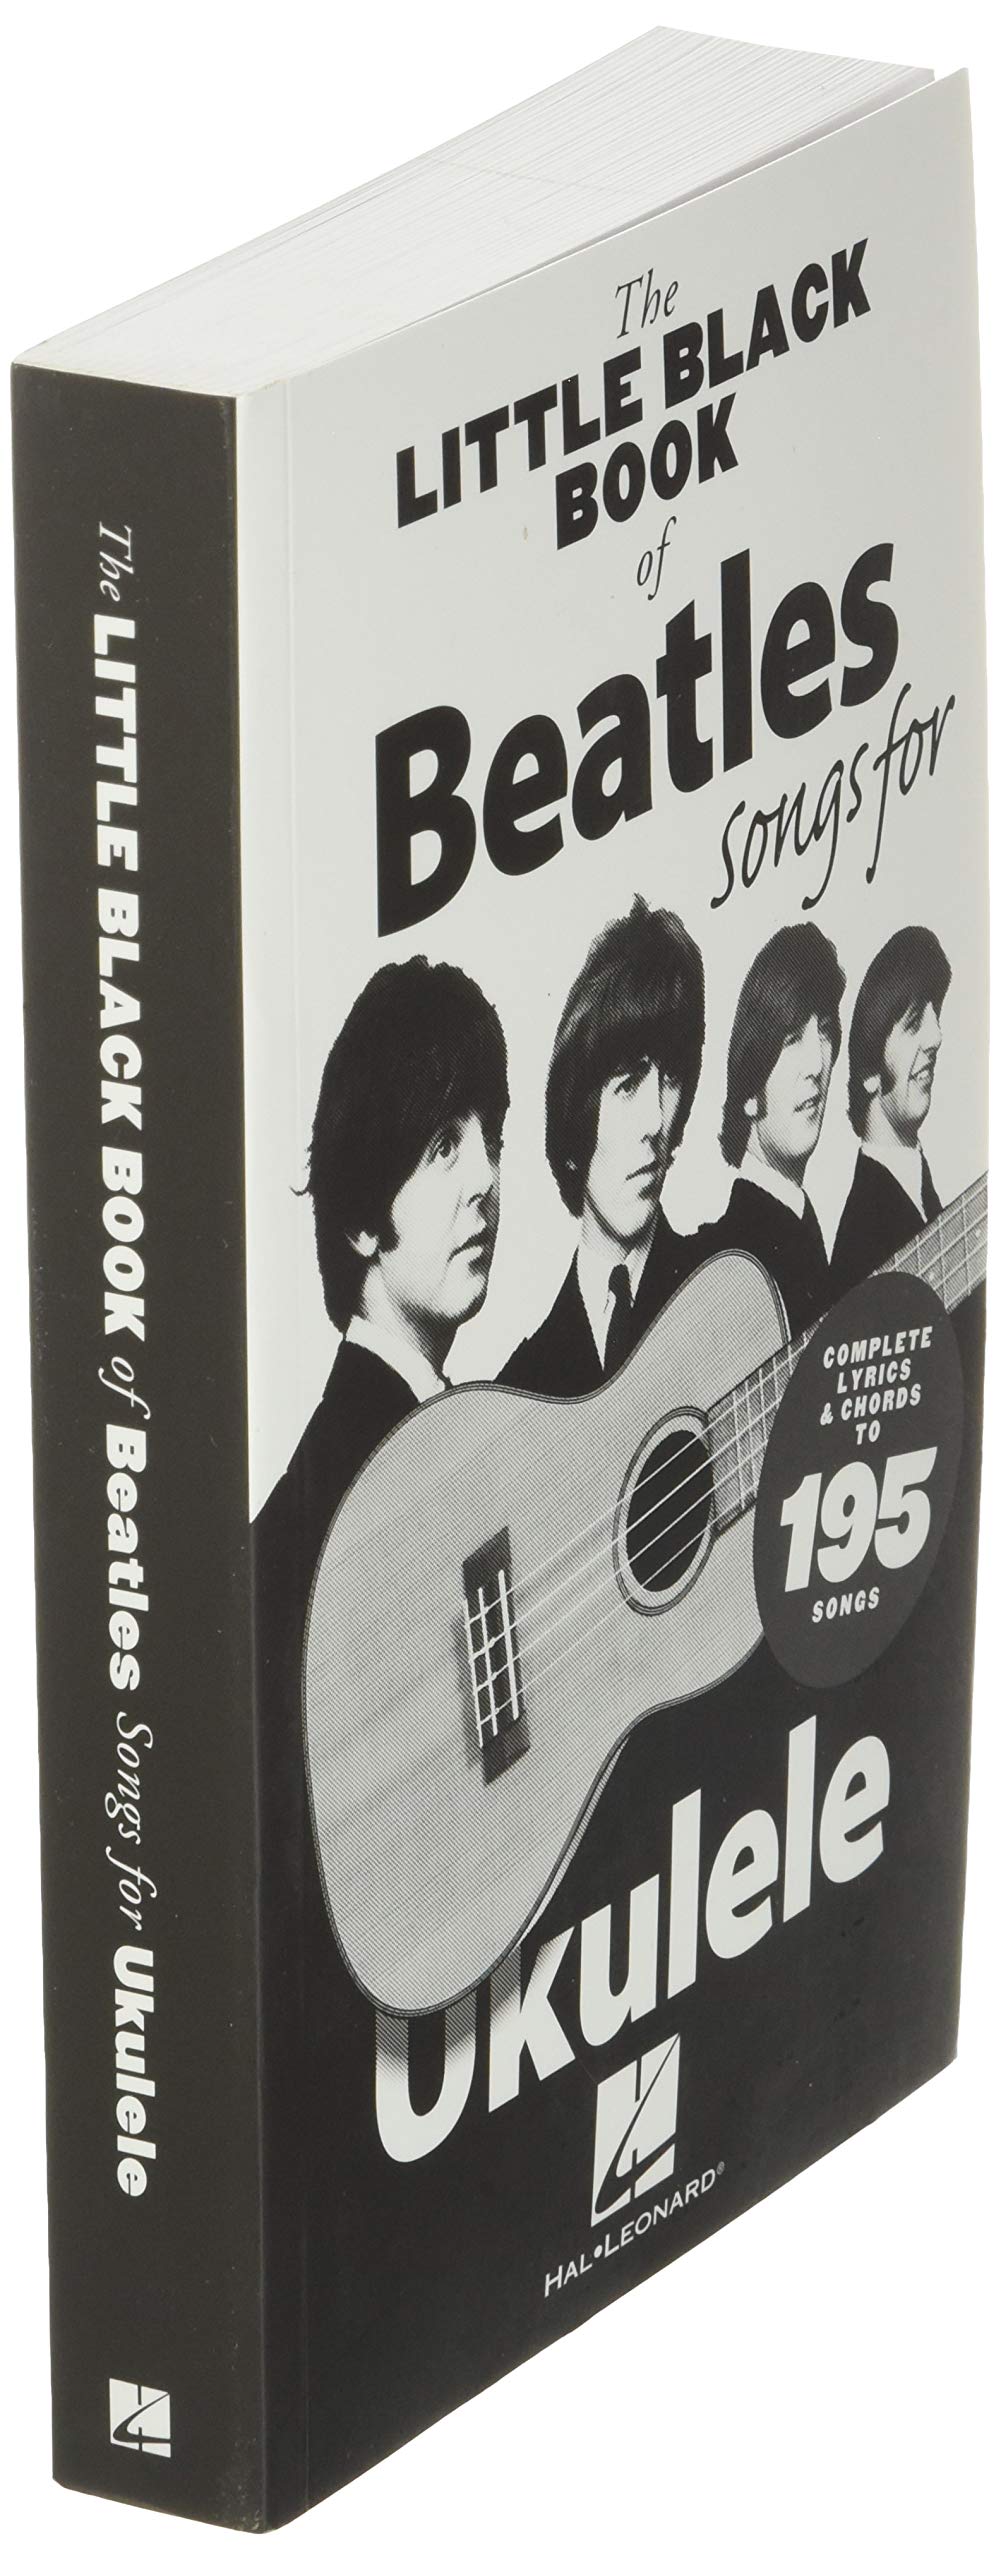 The Little Black Book Of Beatles Songs For Ukulele - 195 Songs